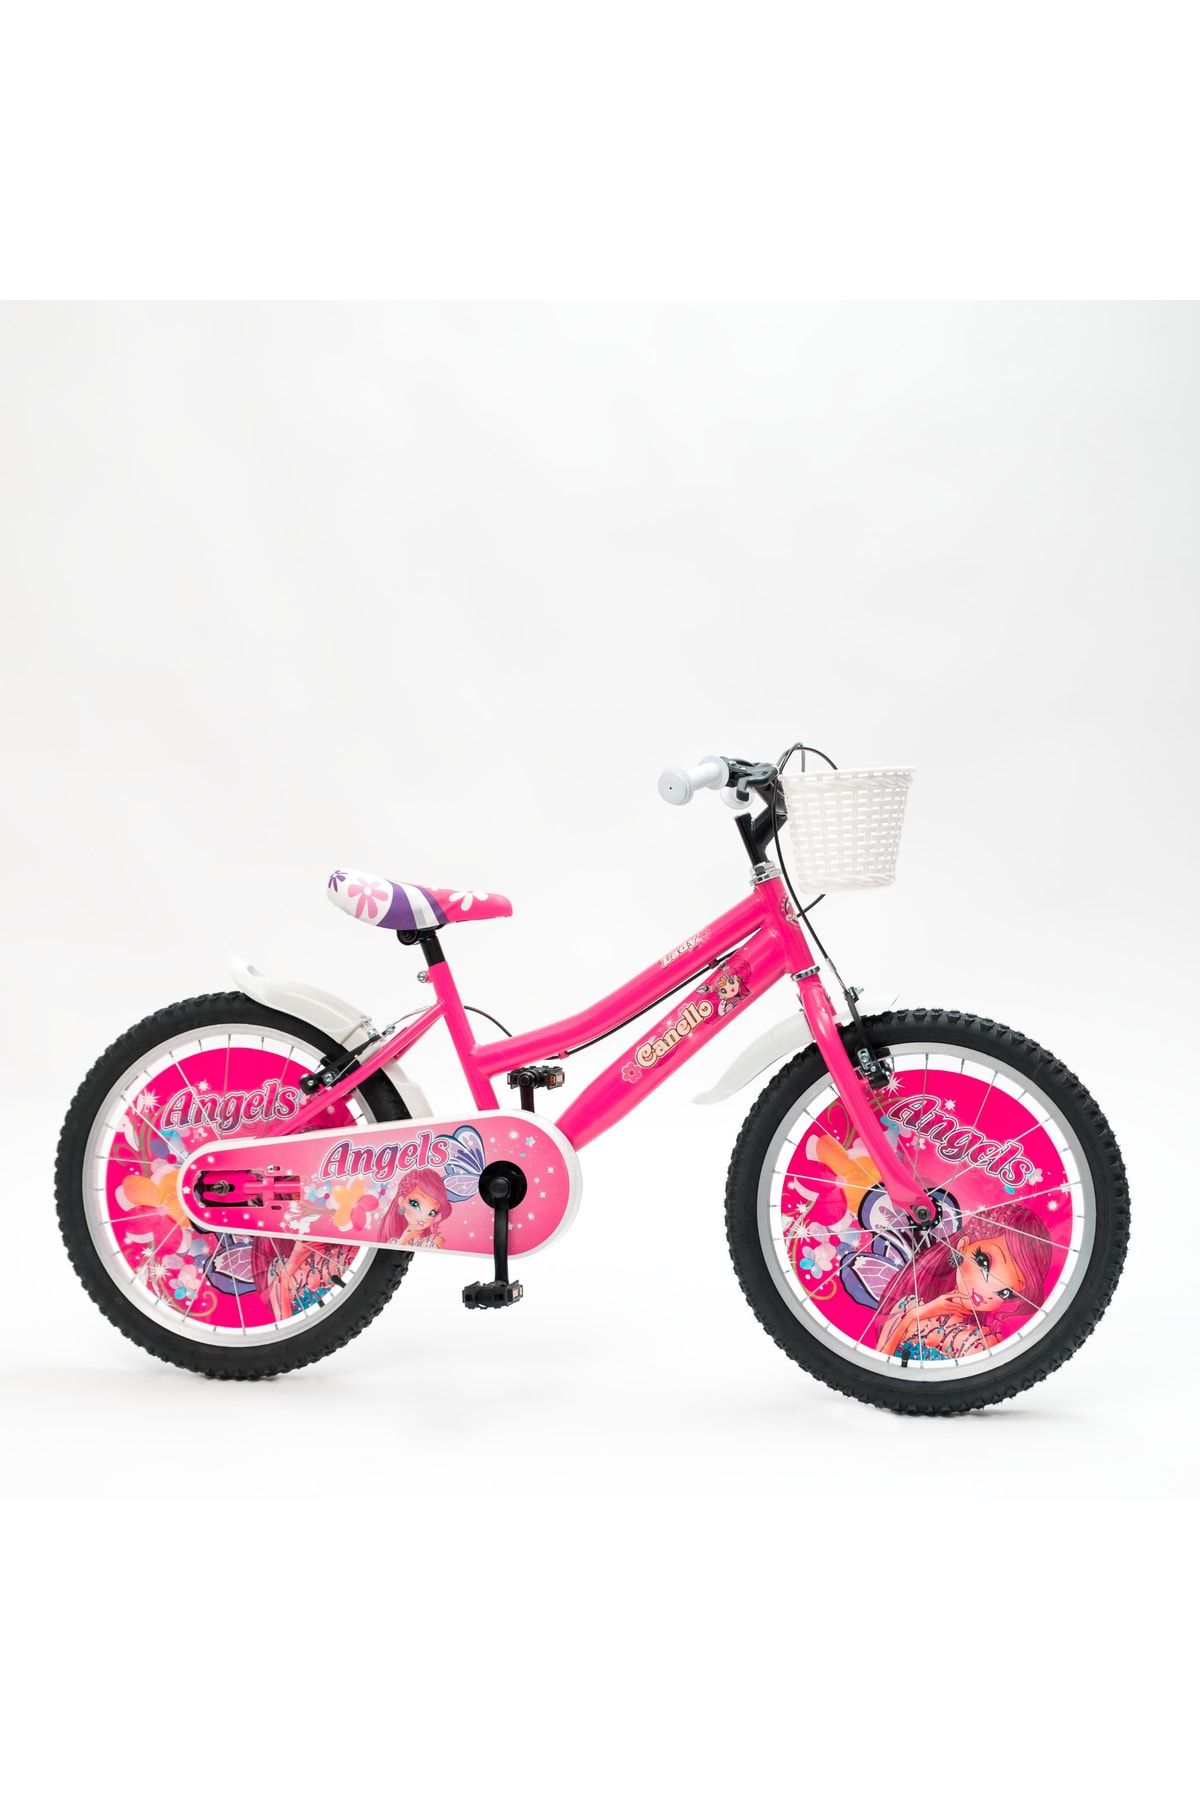 Canello 2060 Yk 20 Jant Kız Çocuk Bisikleti Pembe